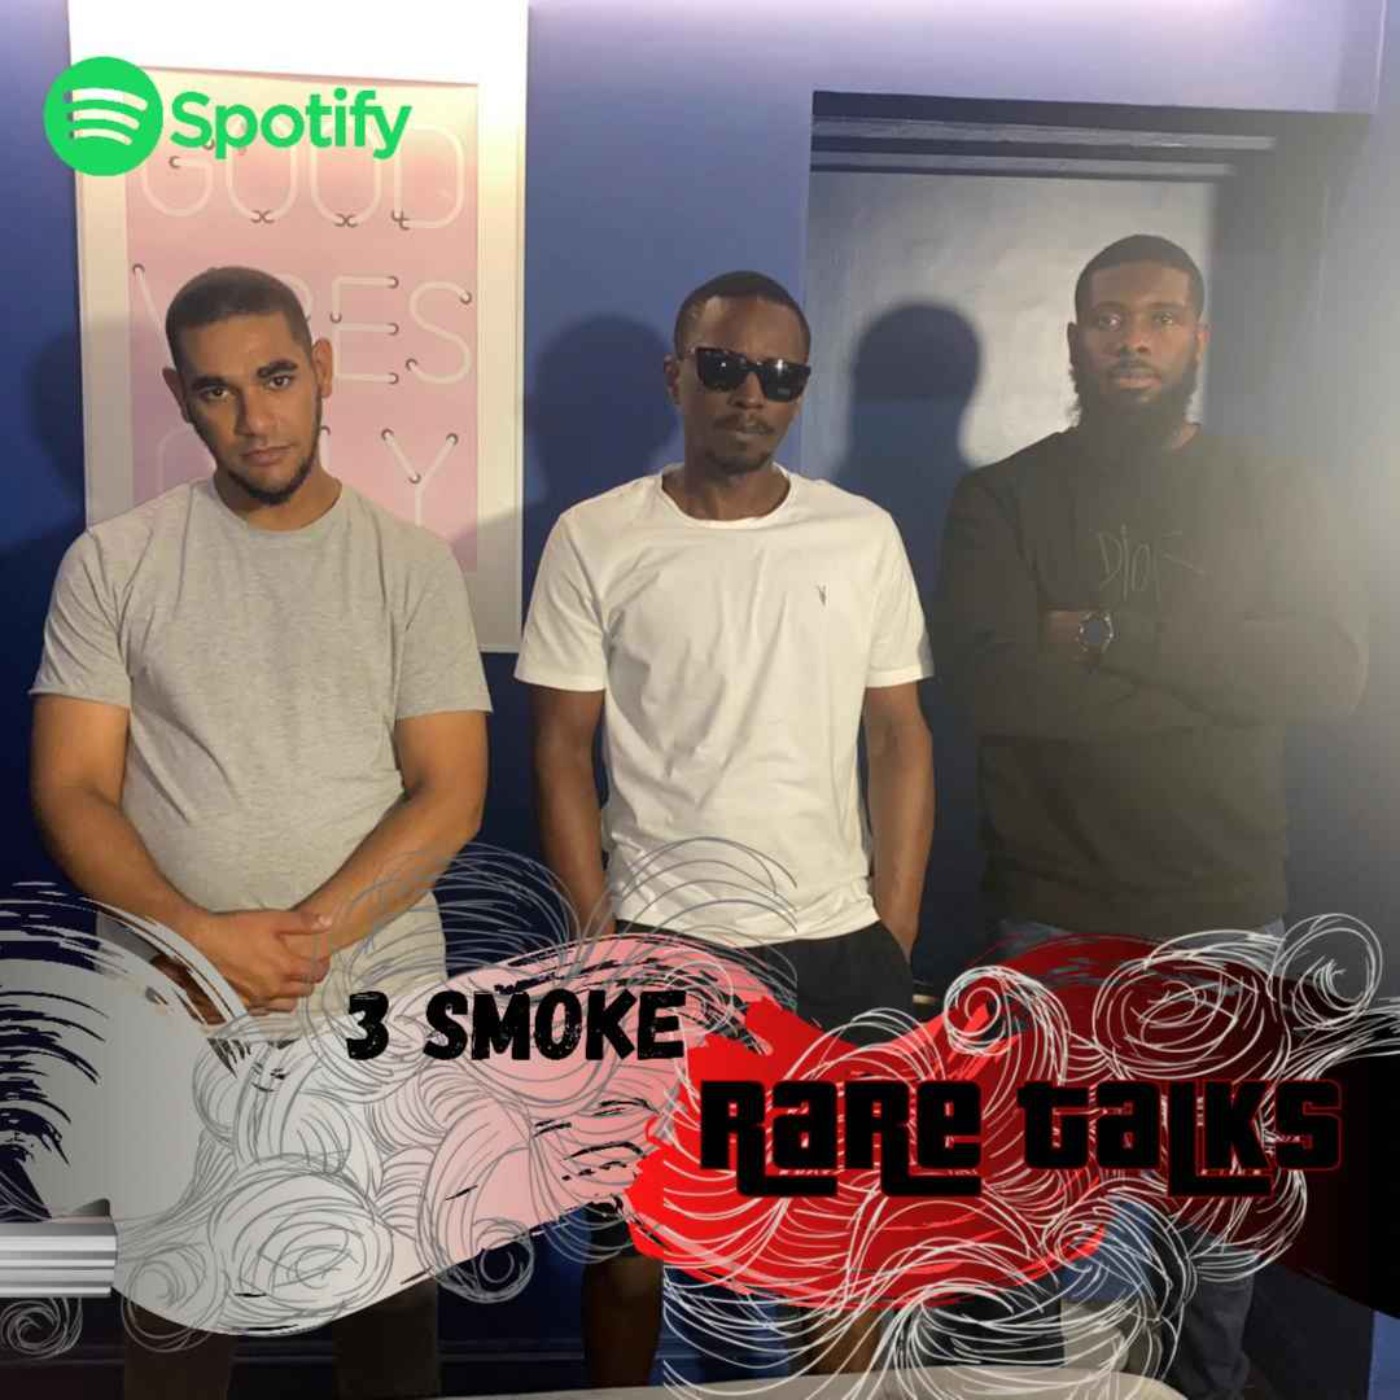 cover art for "3 SMOKE"